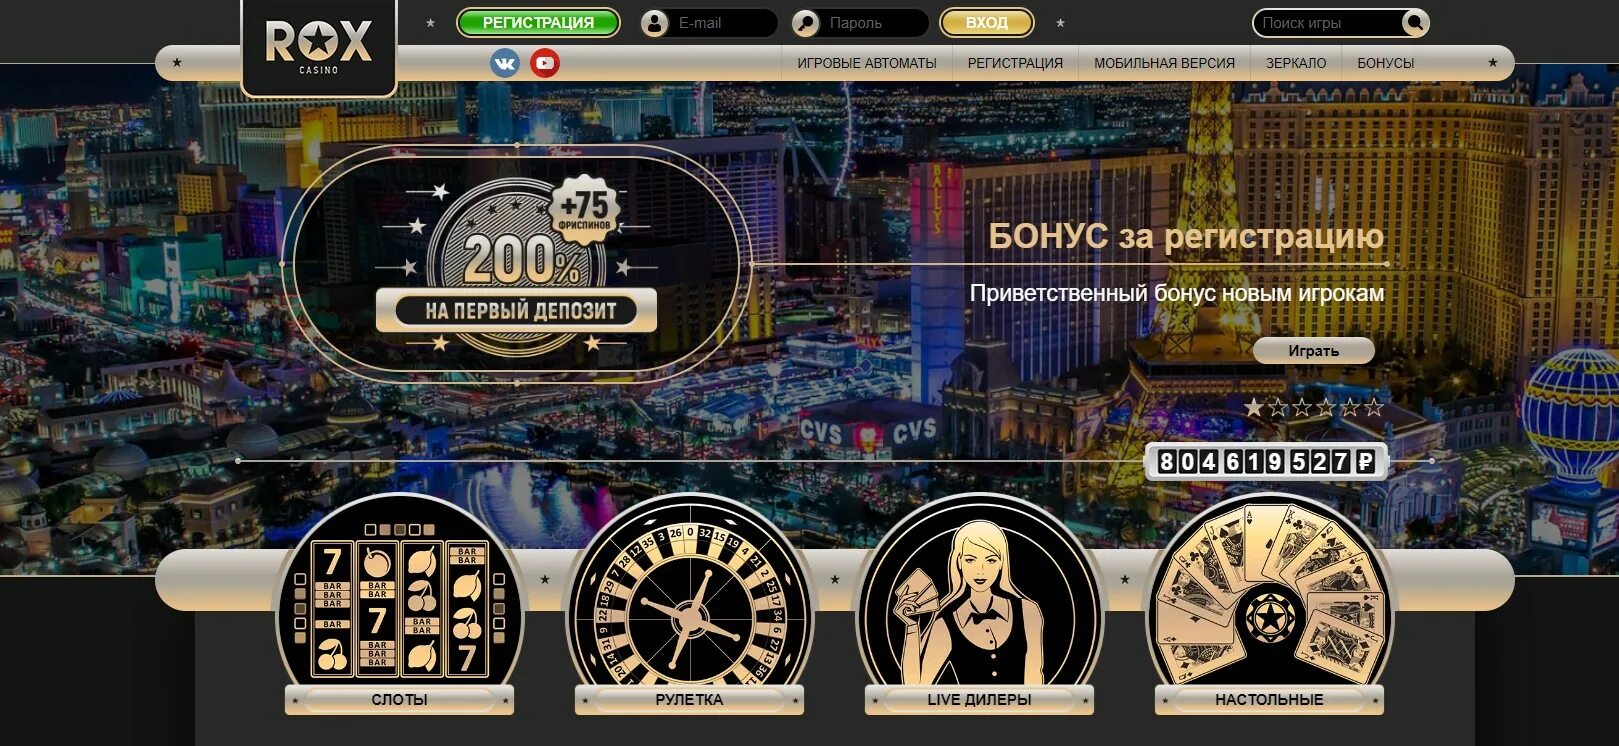 Rox casino зеркало rox games com. Игровые автоматы Рокс казино. Рокс казино зеркало. Рок казино.